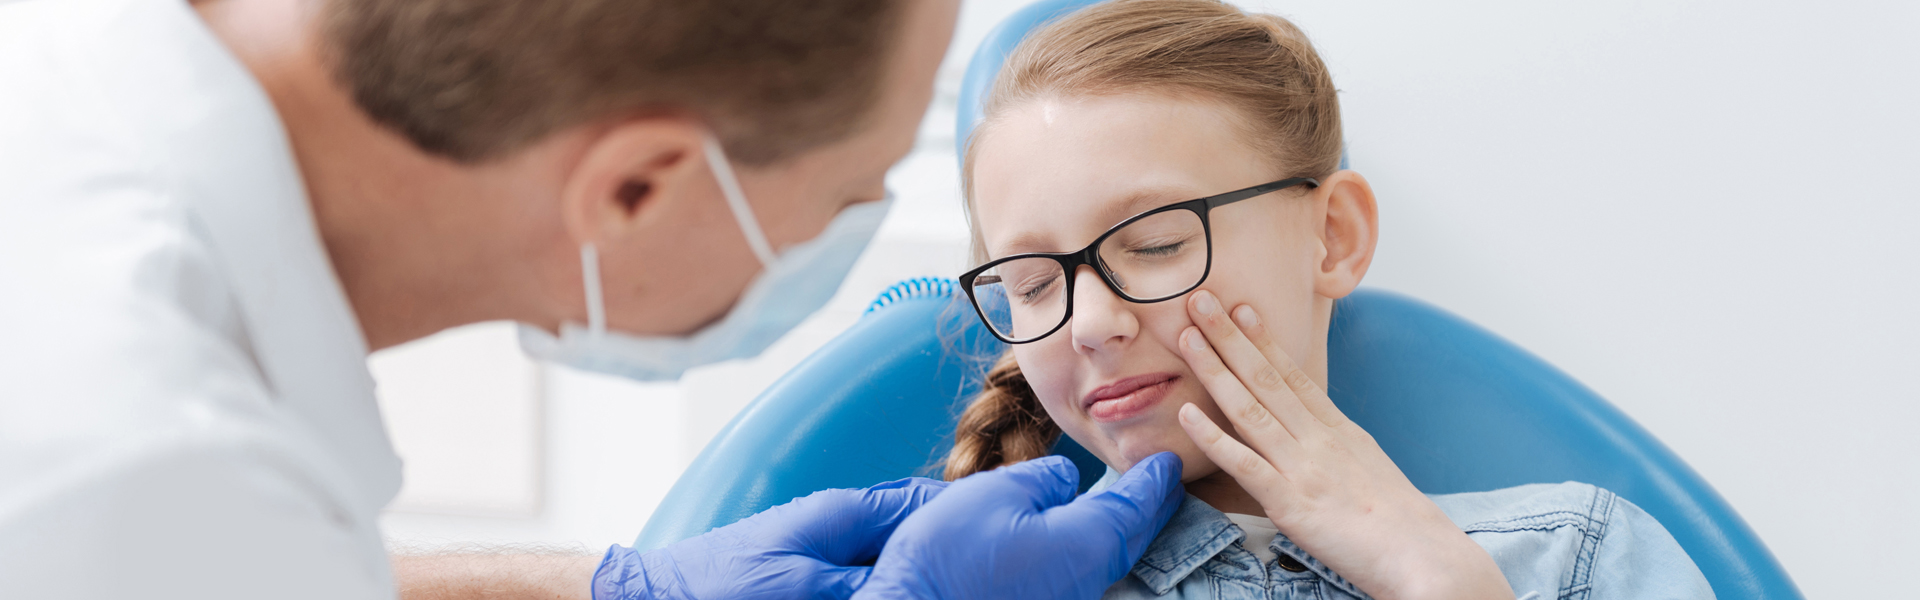 Emergency Dentistry for Children: Tips for Managing Pediatric Dental Emergencies